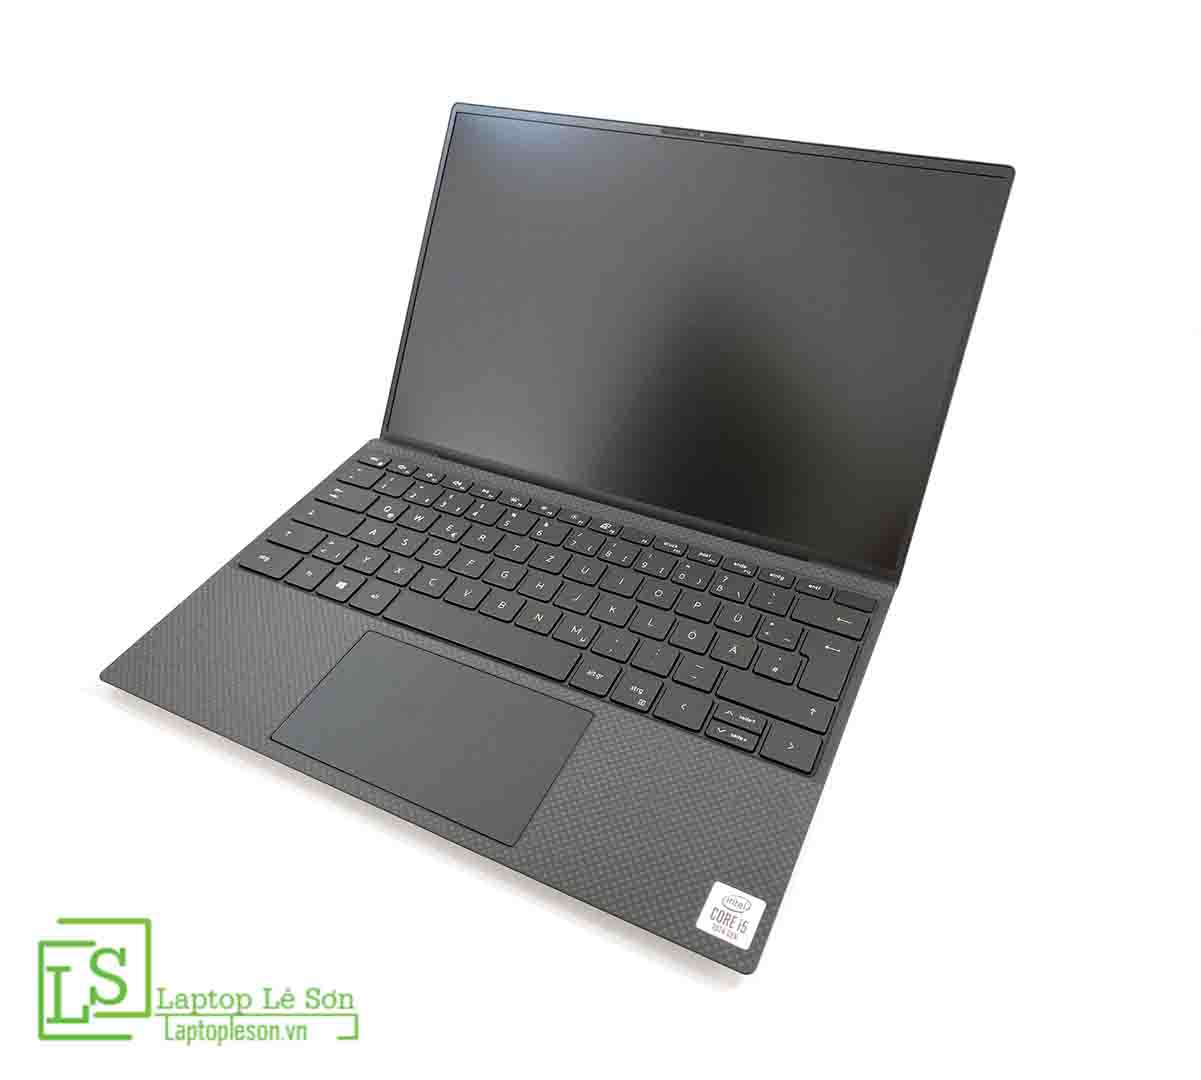 Dell XPS 13 9300 Laptop Lê Sơn 02